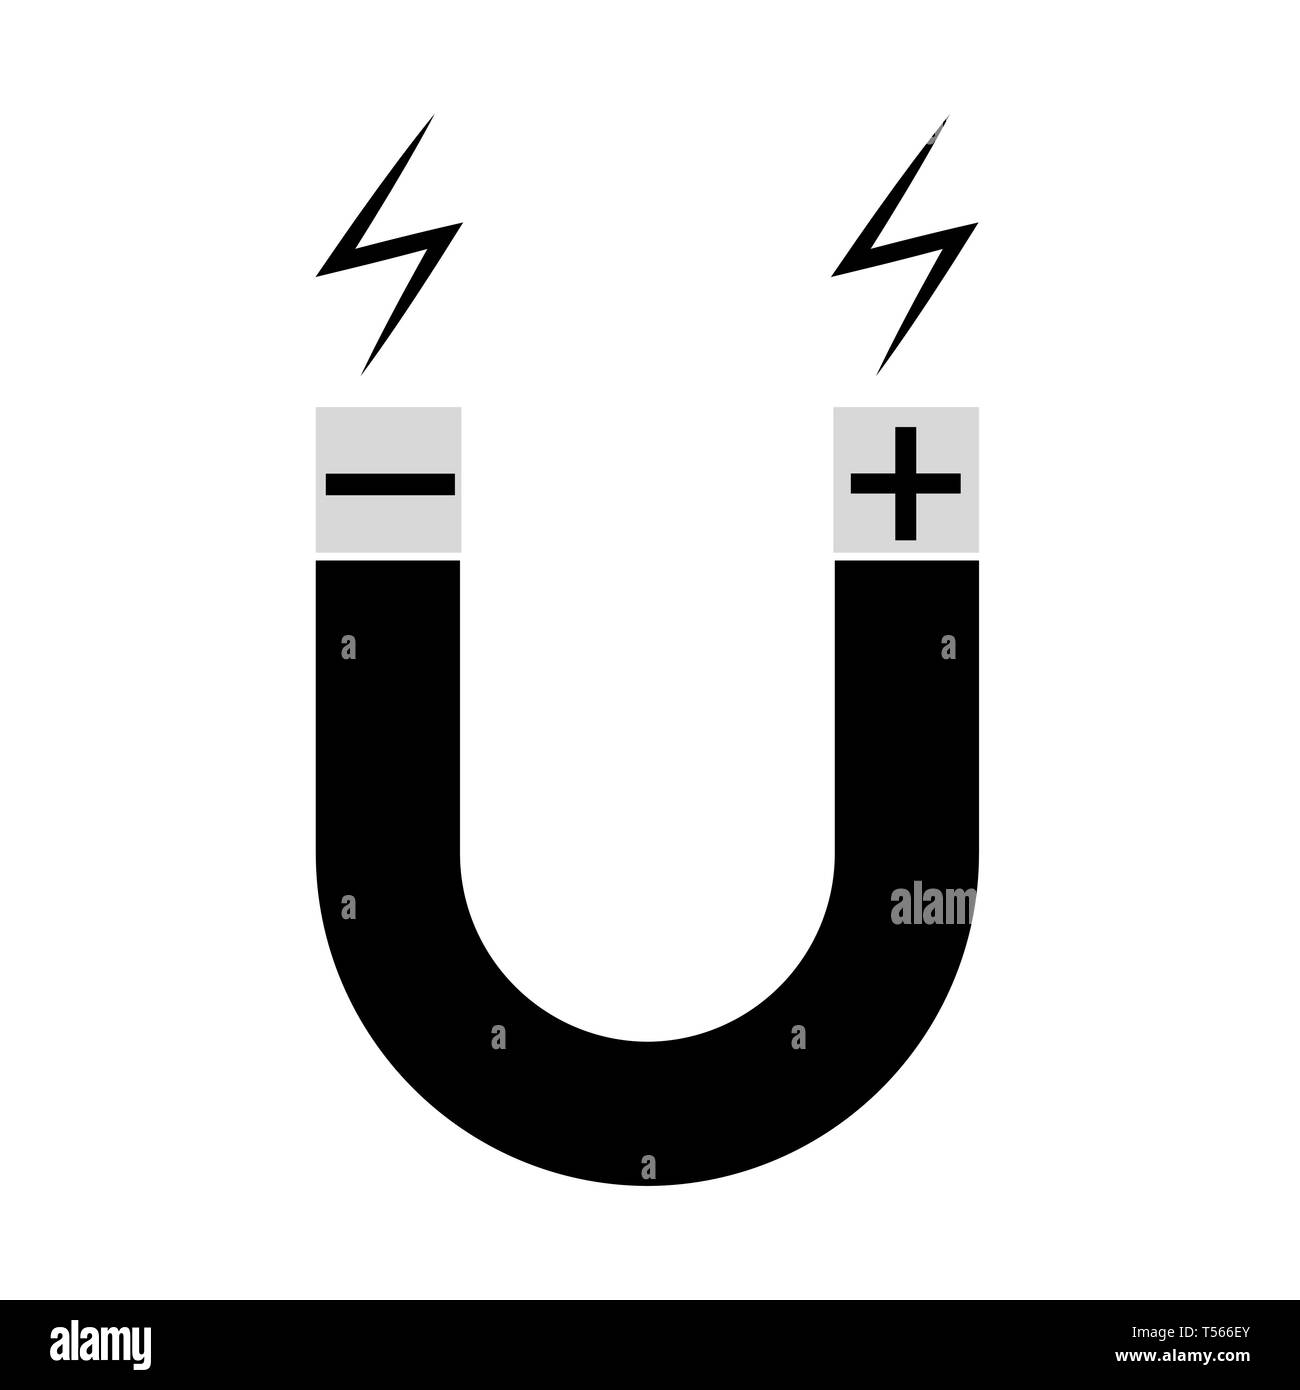 magnet #logo #verbicon by a Mia Fahrenholz( Font Franklin Gothic Medium) |  Typography logo inspiration, Creative lettering, Creative graphic design